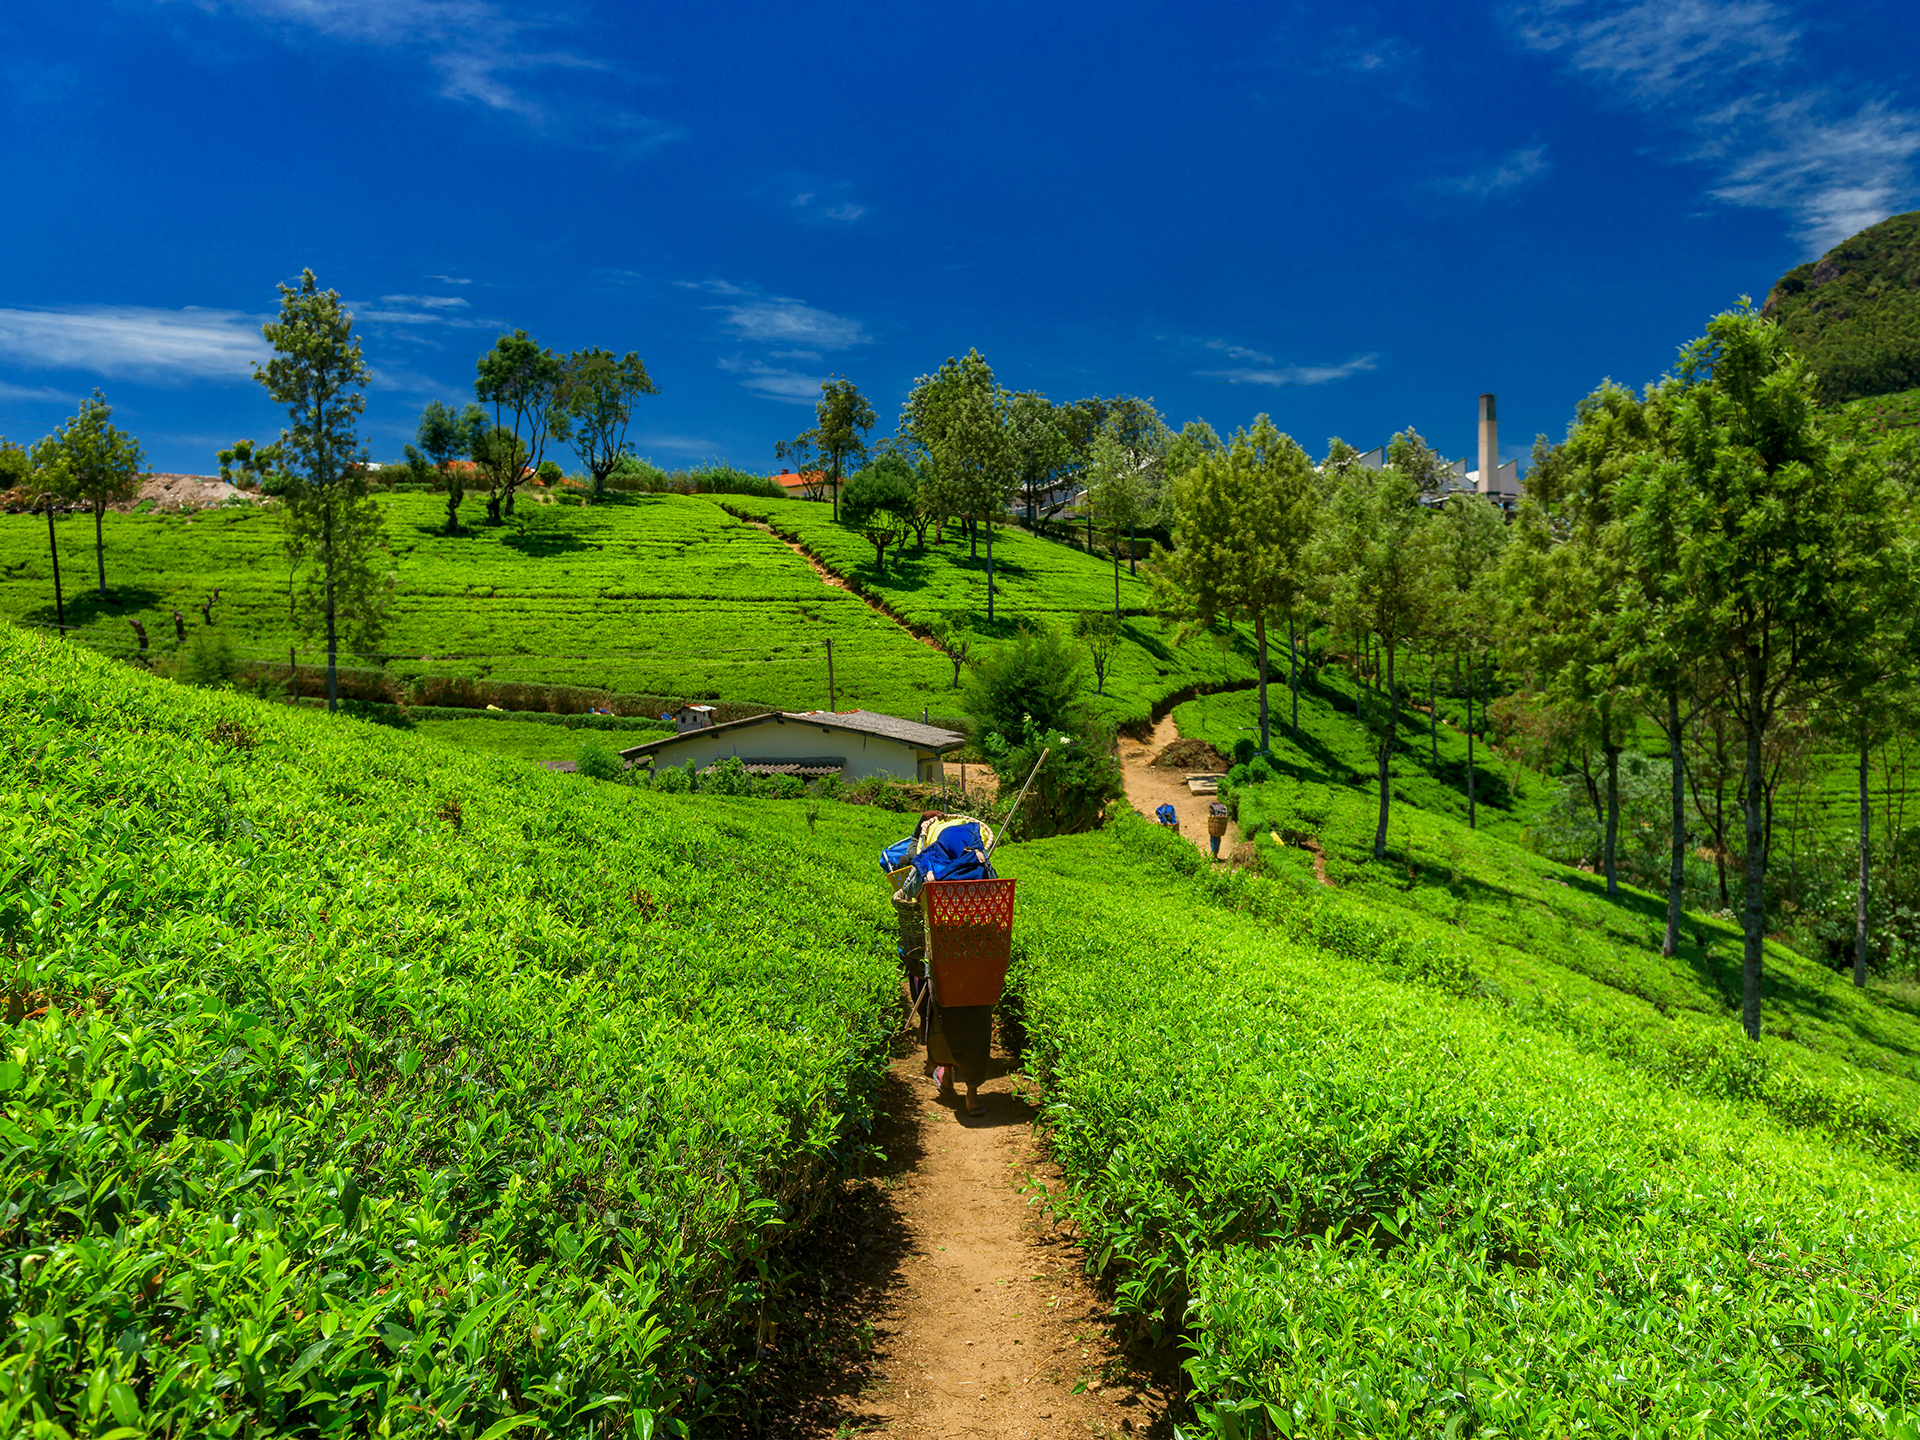 Why We Cannot Blame the Sri Lankan Crisis on Organic Farming